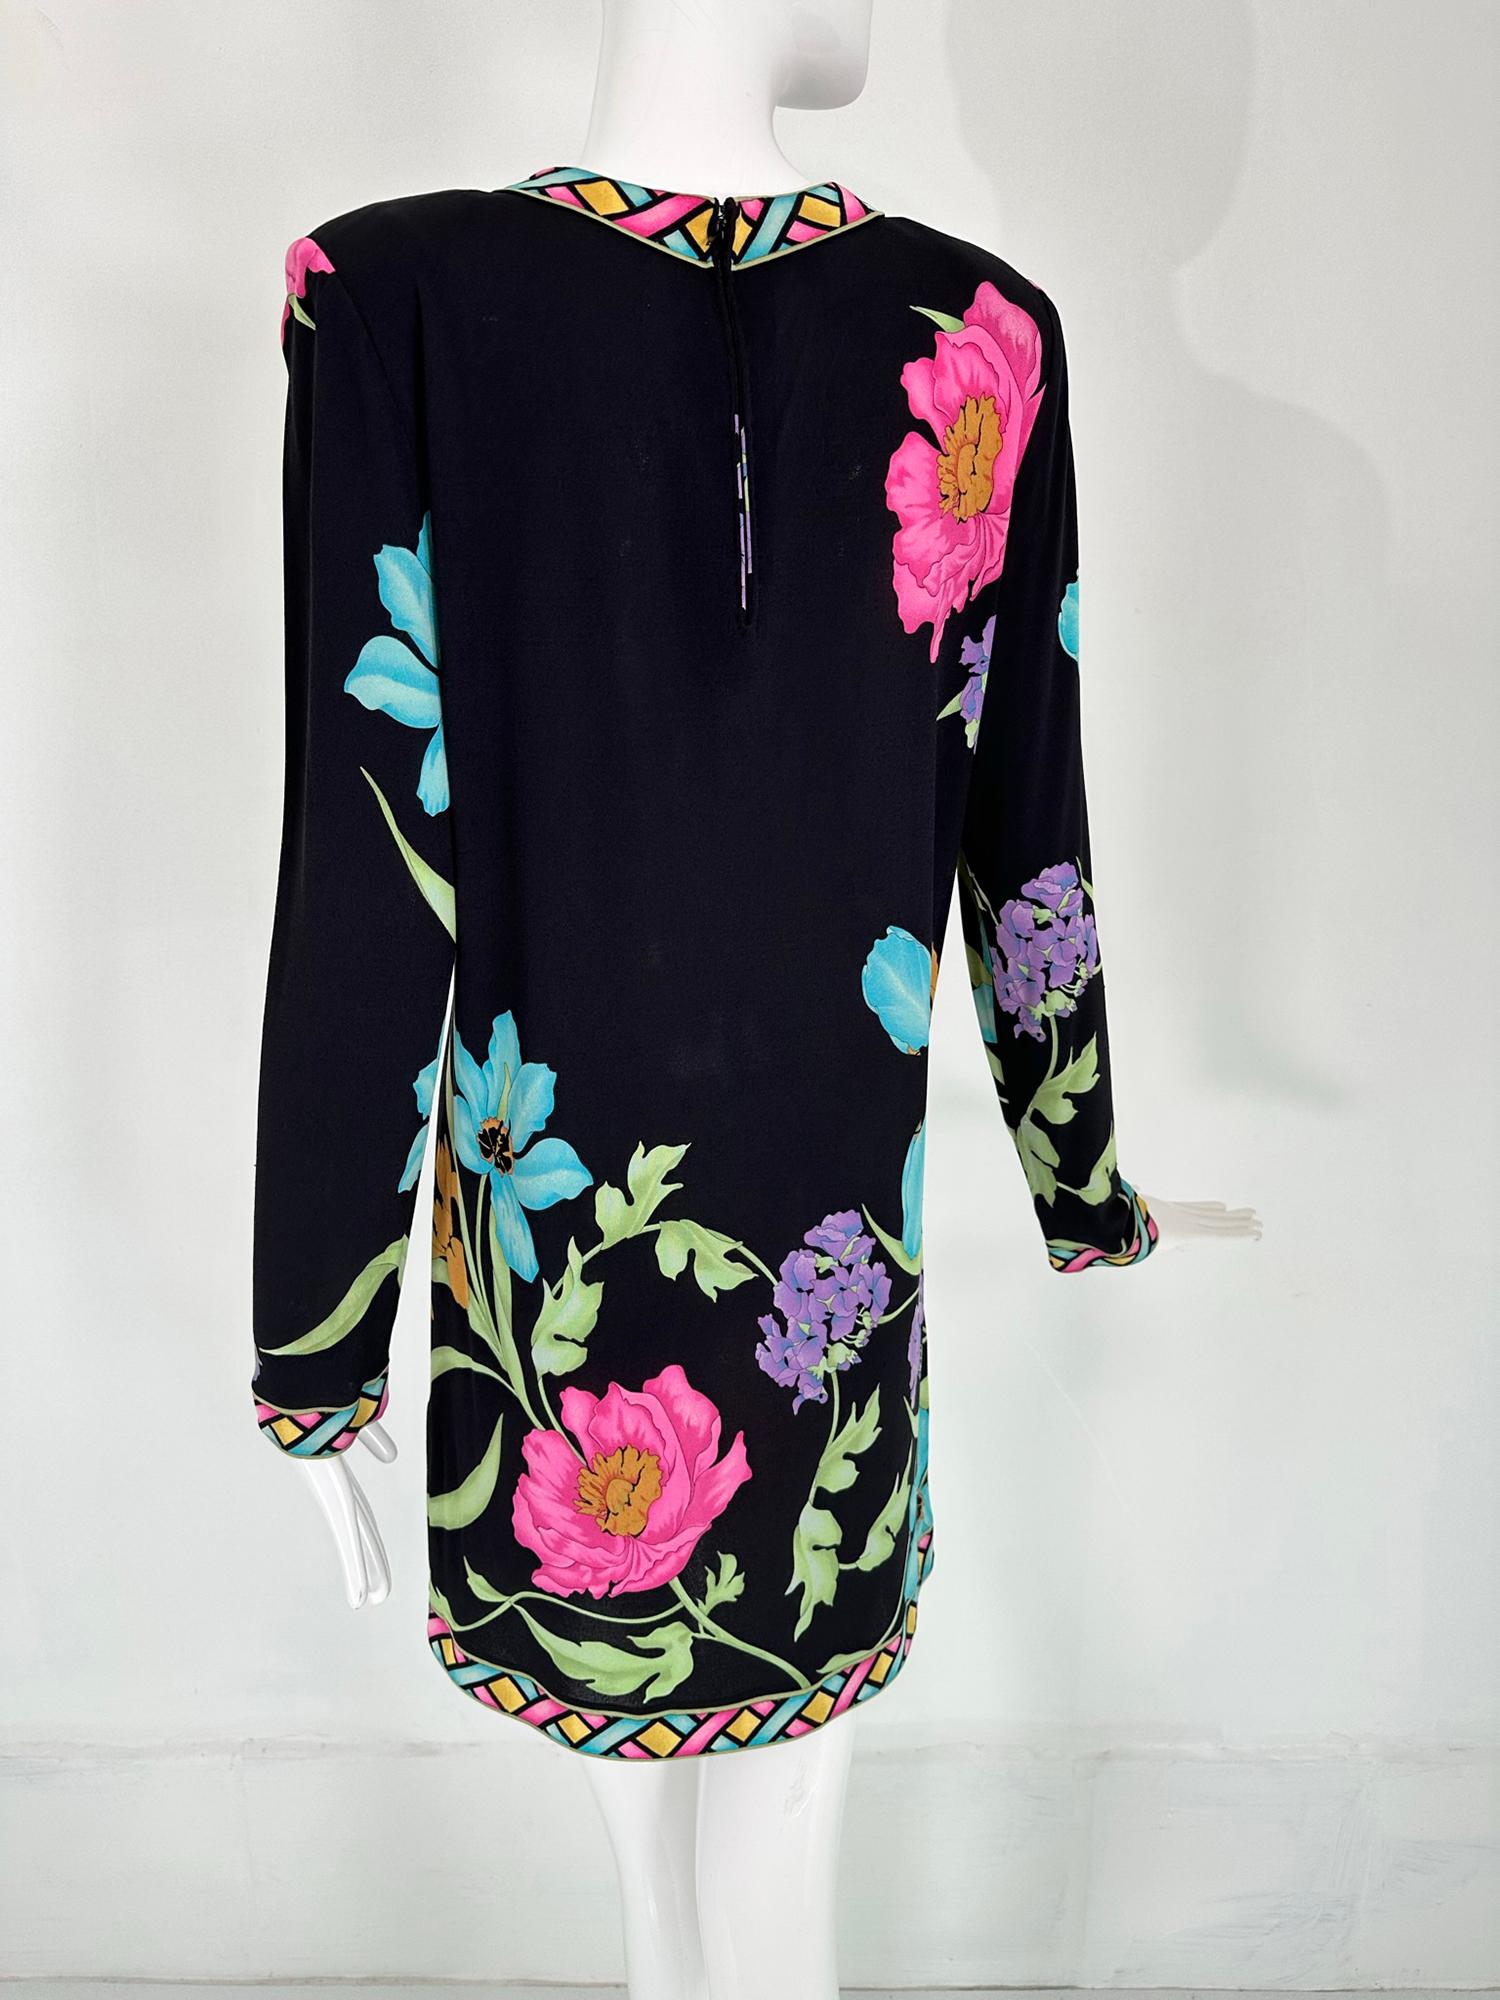 Averaro Bessi Spectacular Silk Vibrant Floral Tunic Dress 12  For Sale 4